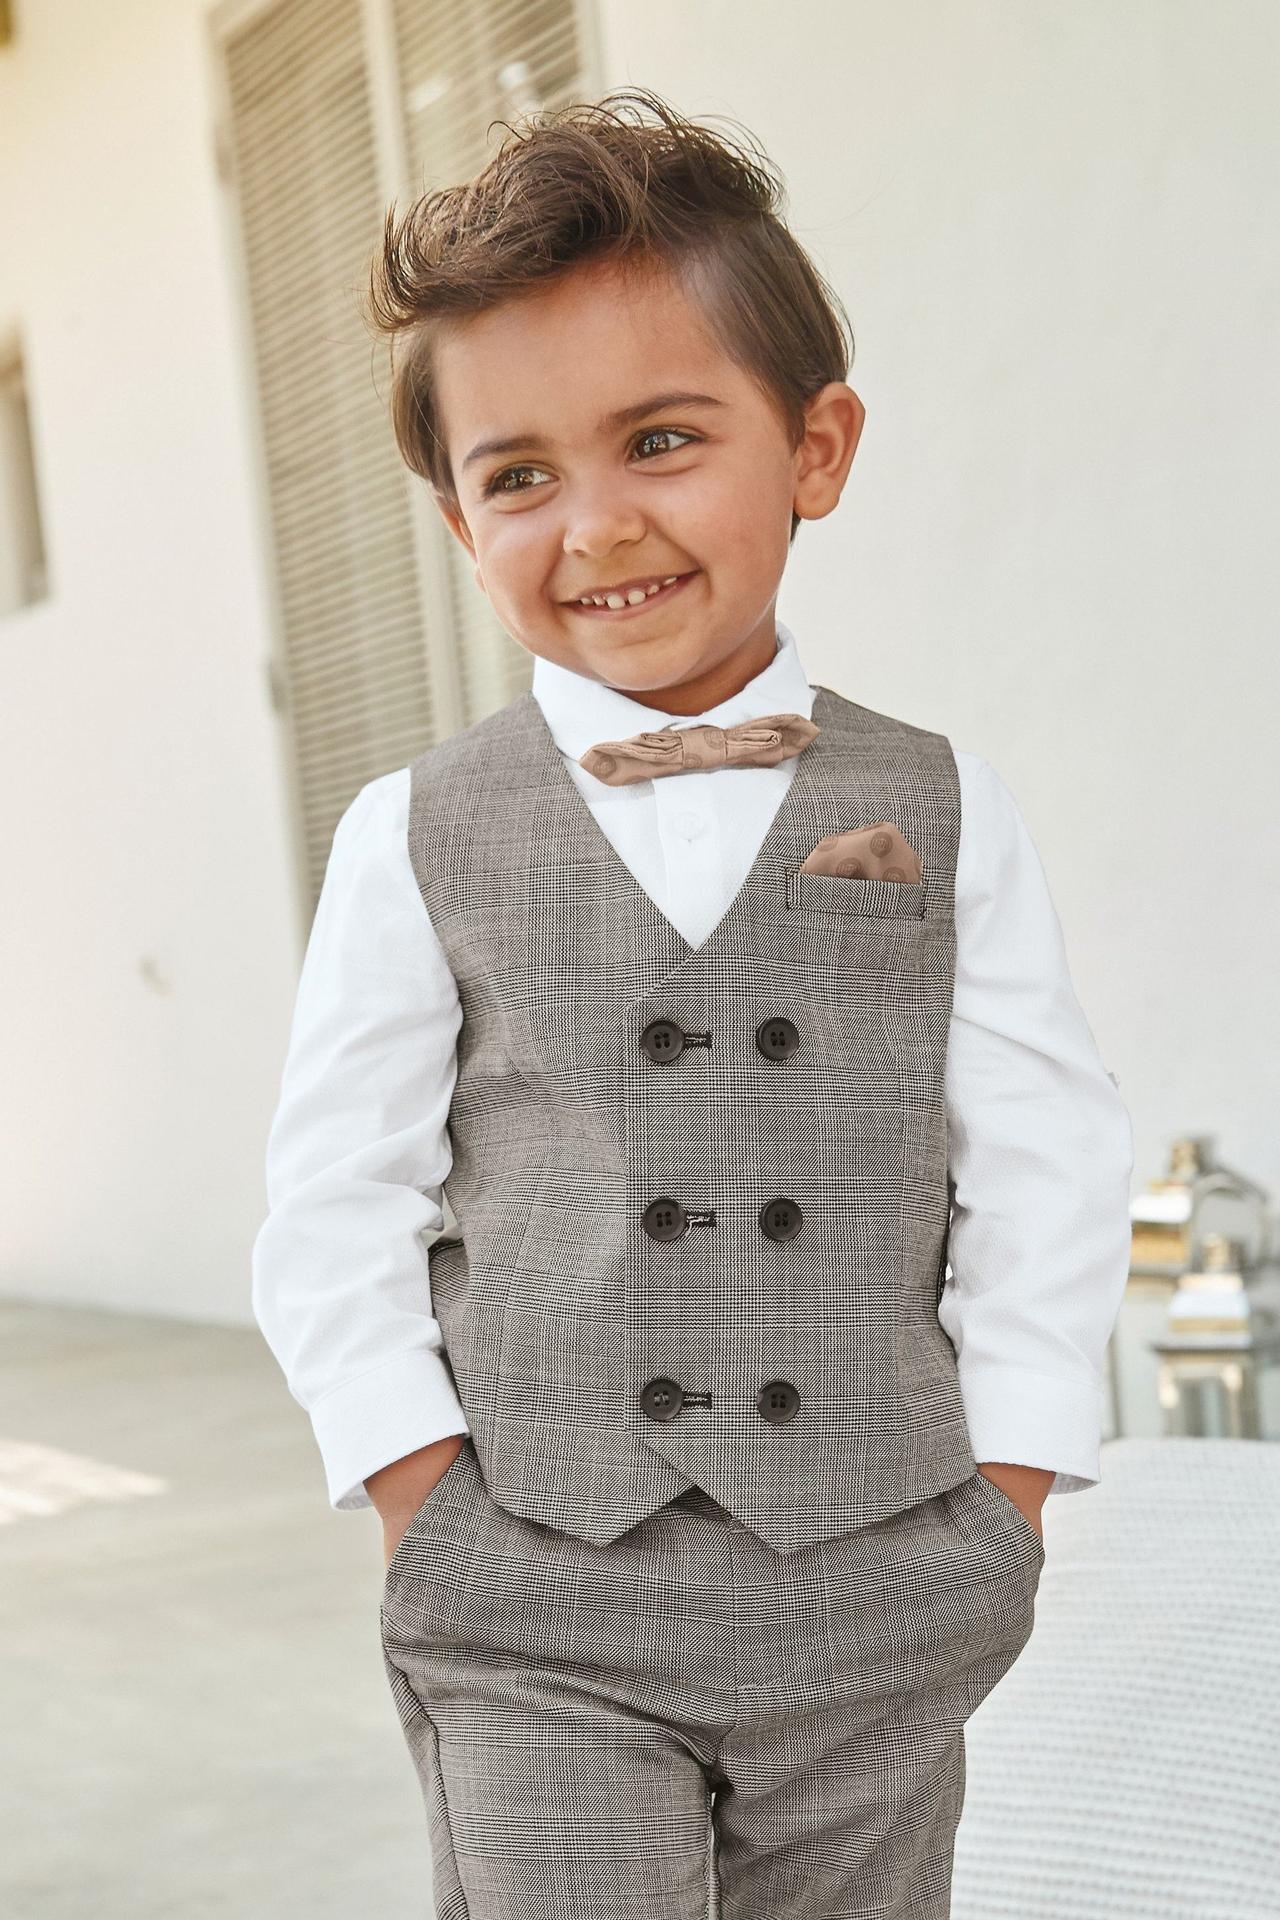 Baby Toddler Boys Gentleman Suit Bow Tie Dress Shirt Vest Pants Wedding  Outfit | eBay